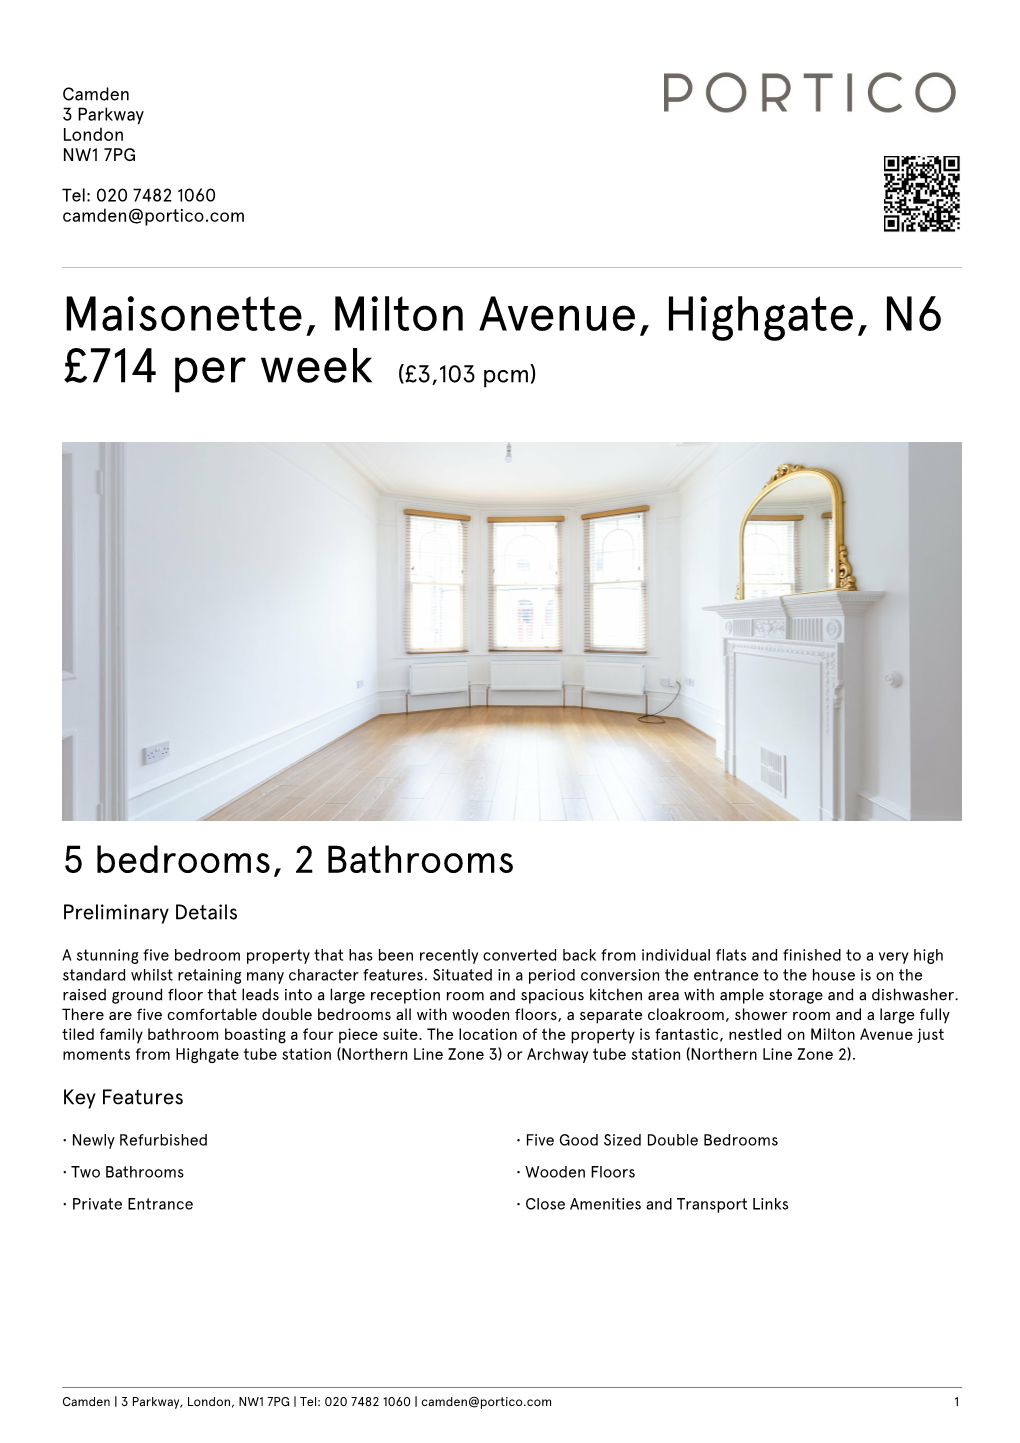 Maisonette, Milton Avenue, Highgate, N6 £714 Per Week